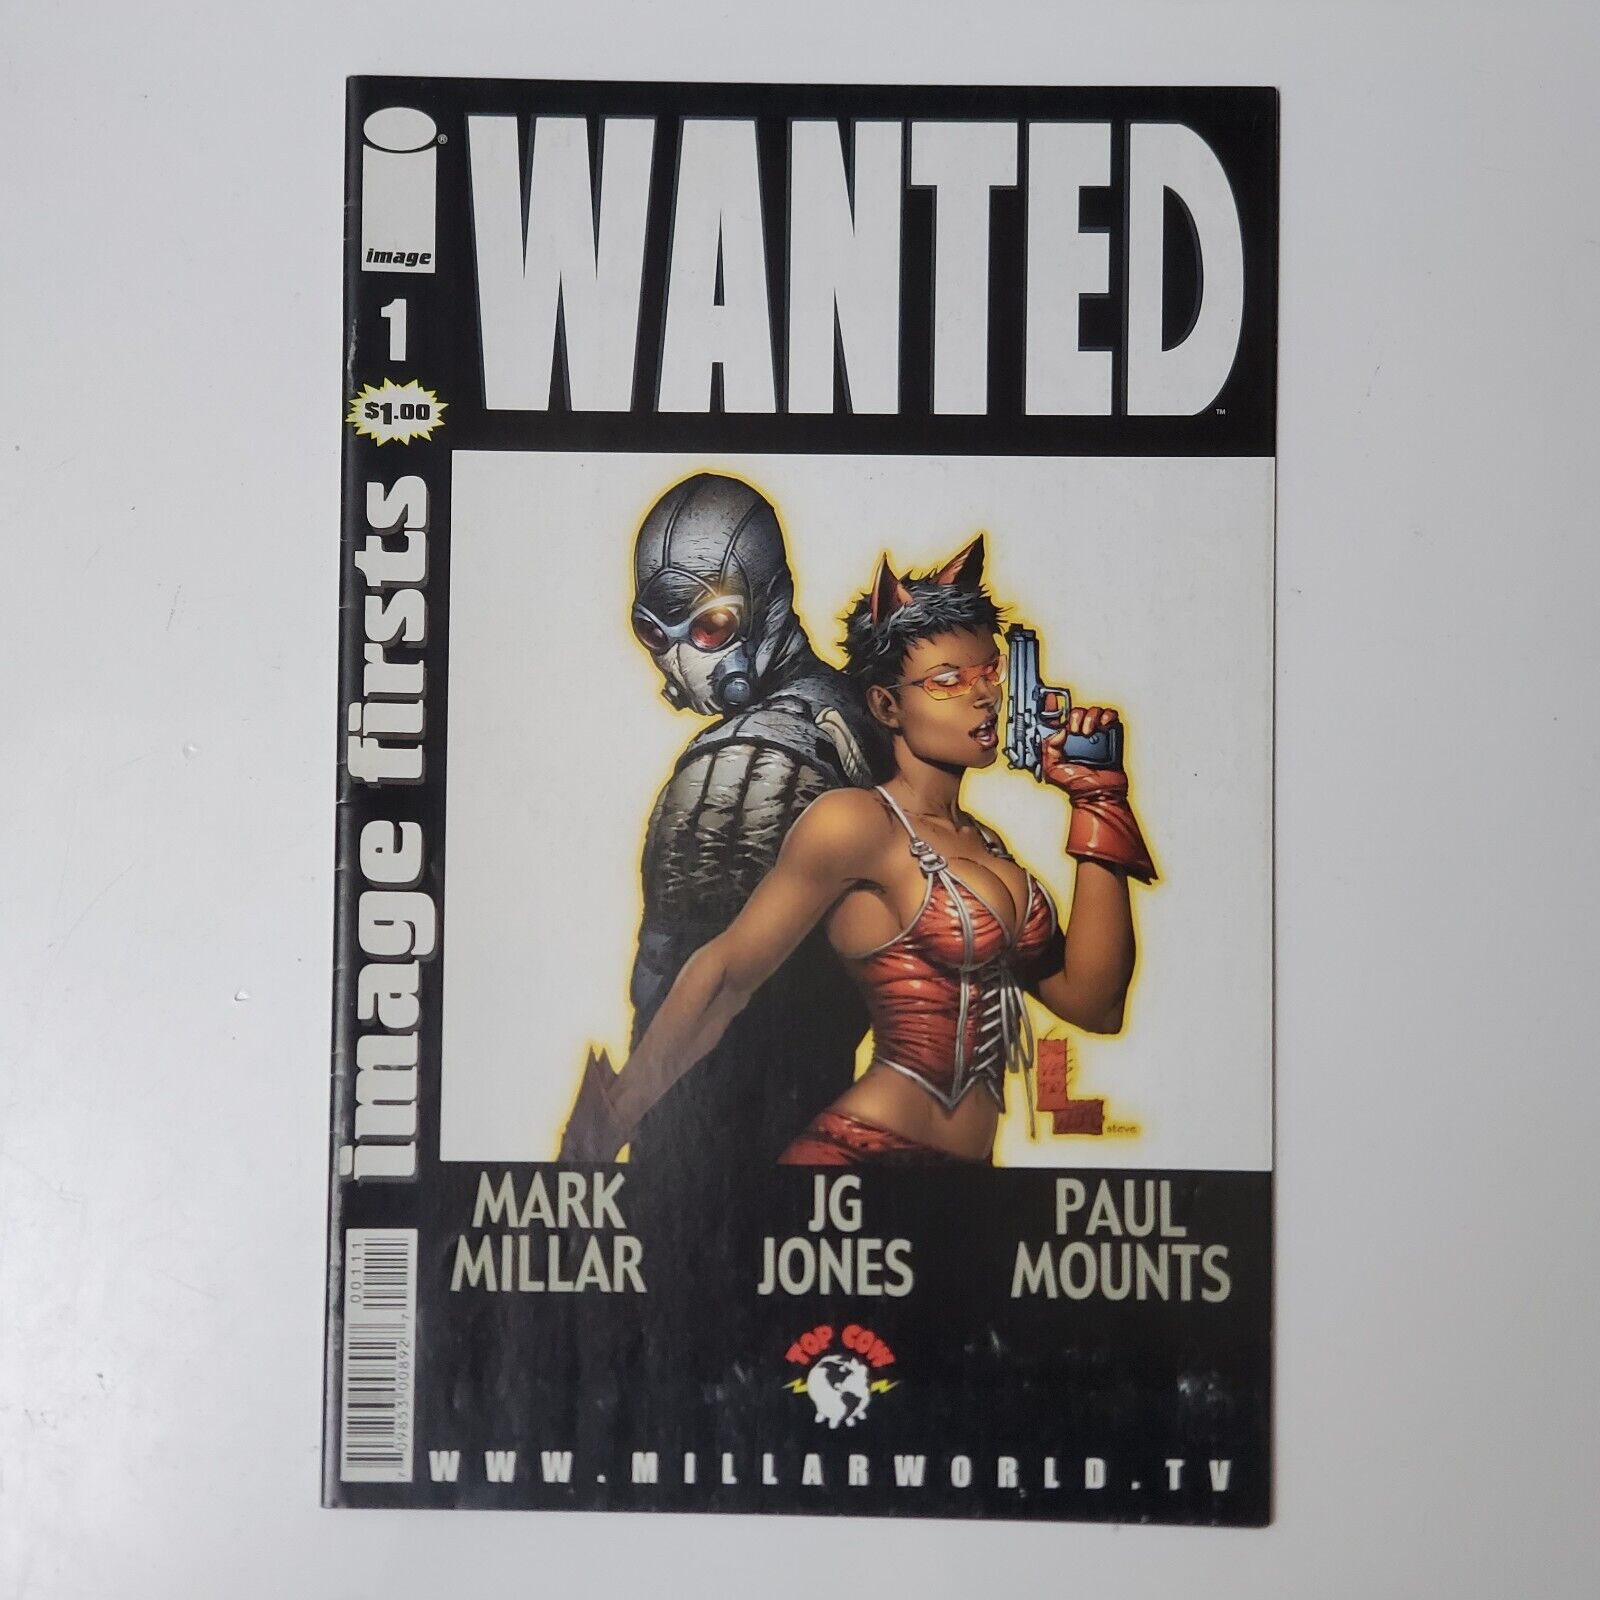 WANTED Mark Millar/JG Jones Image Comic Book #1 Boarded